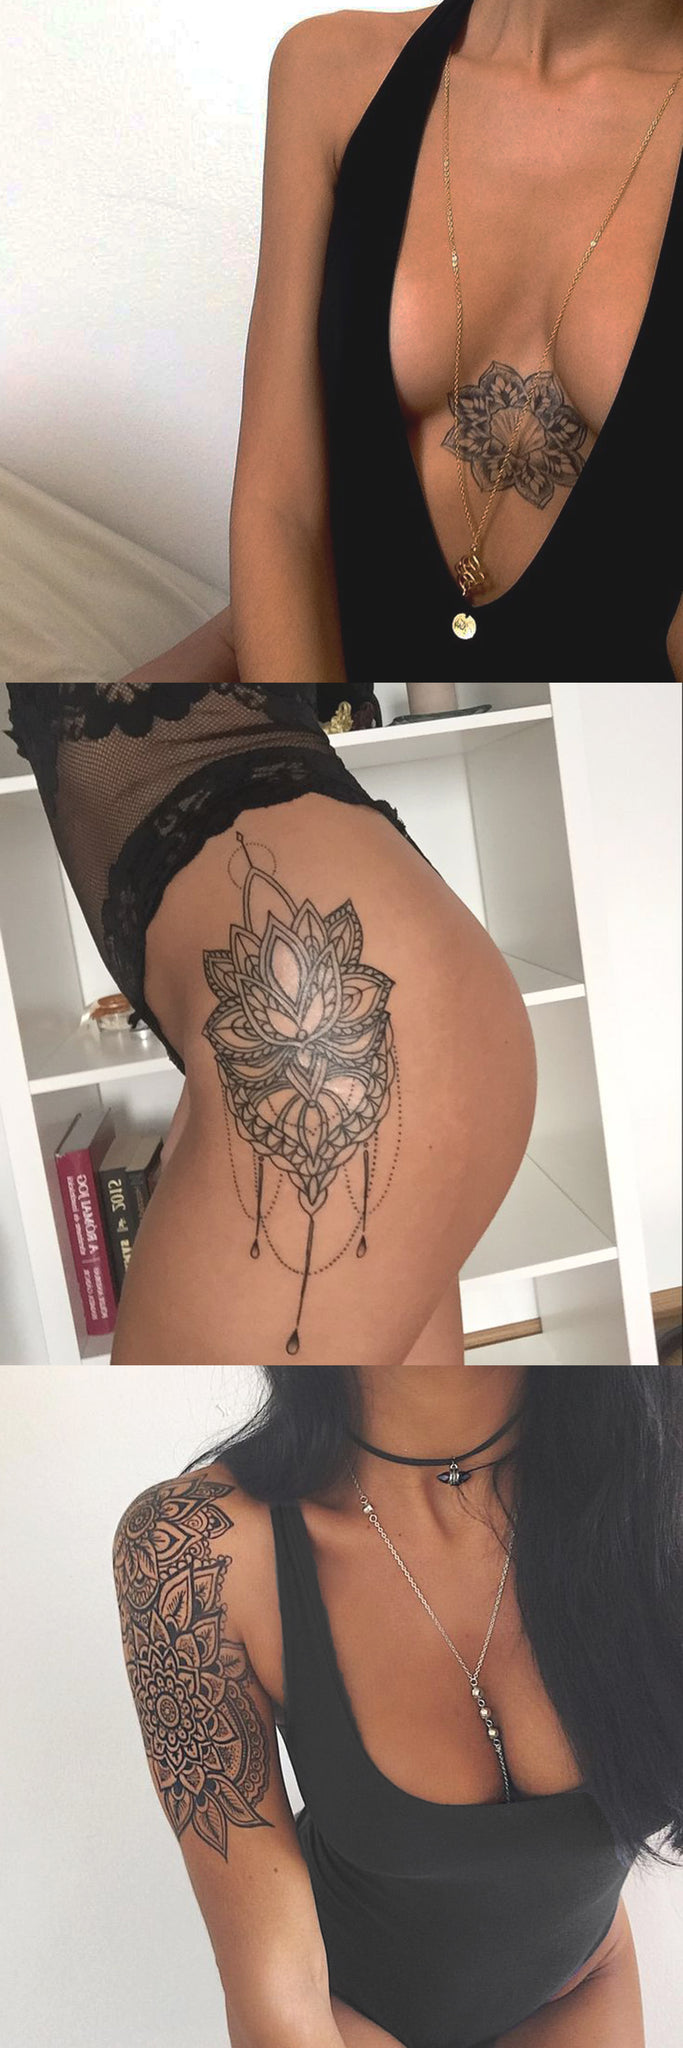 Geometric Simple Lotus Chandelier Mandala Sternum Thigh Arm Sleeve Tattoo Ideas for Women - MyBodiArt.com 